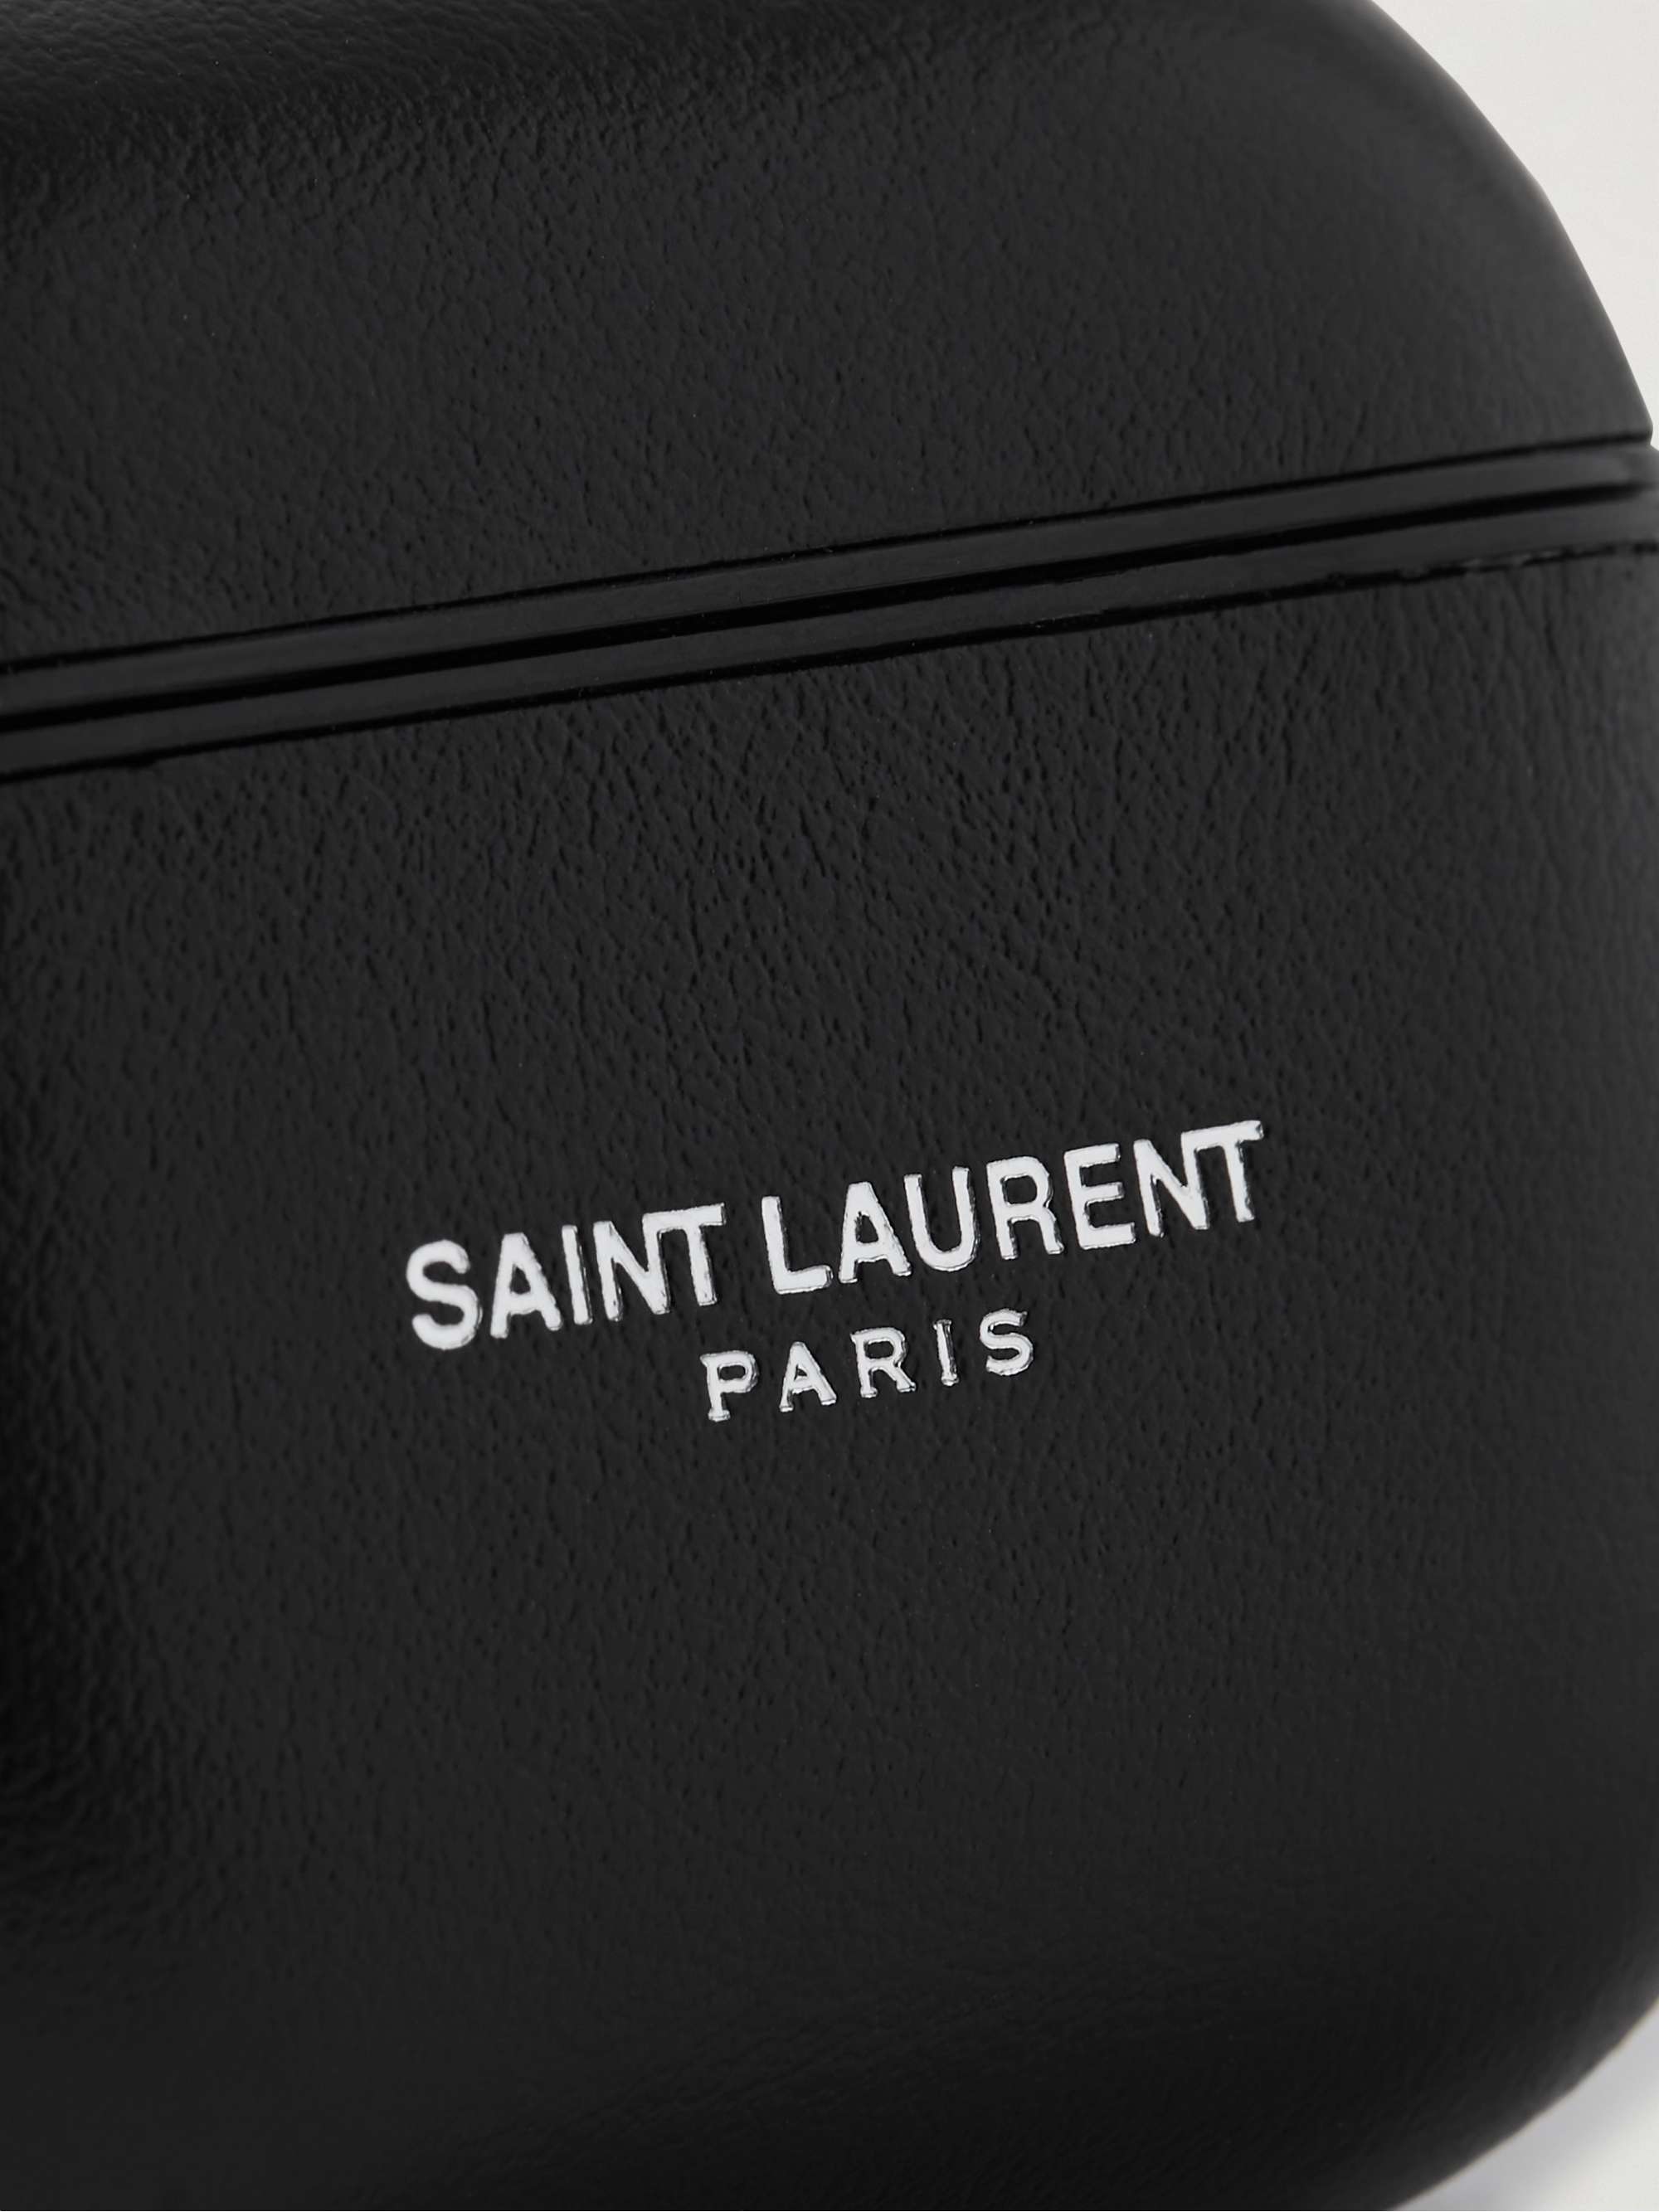 SAINT LAURENT Logo-Print Leather AirPods Case